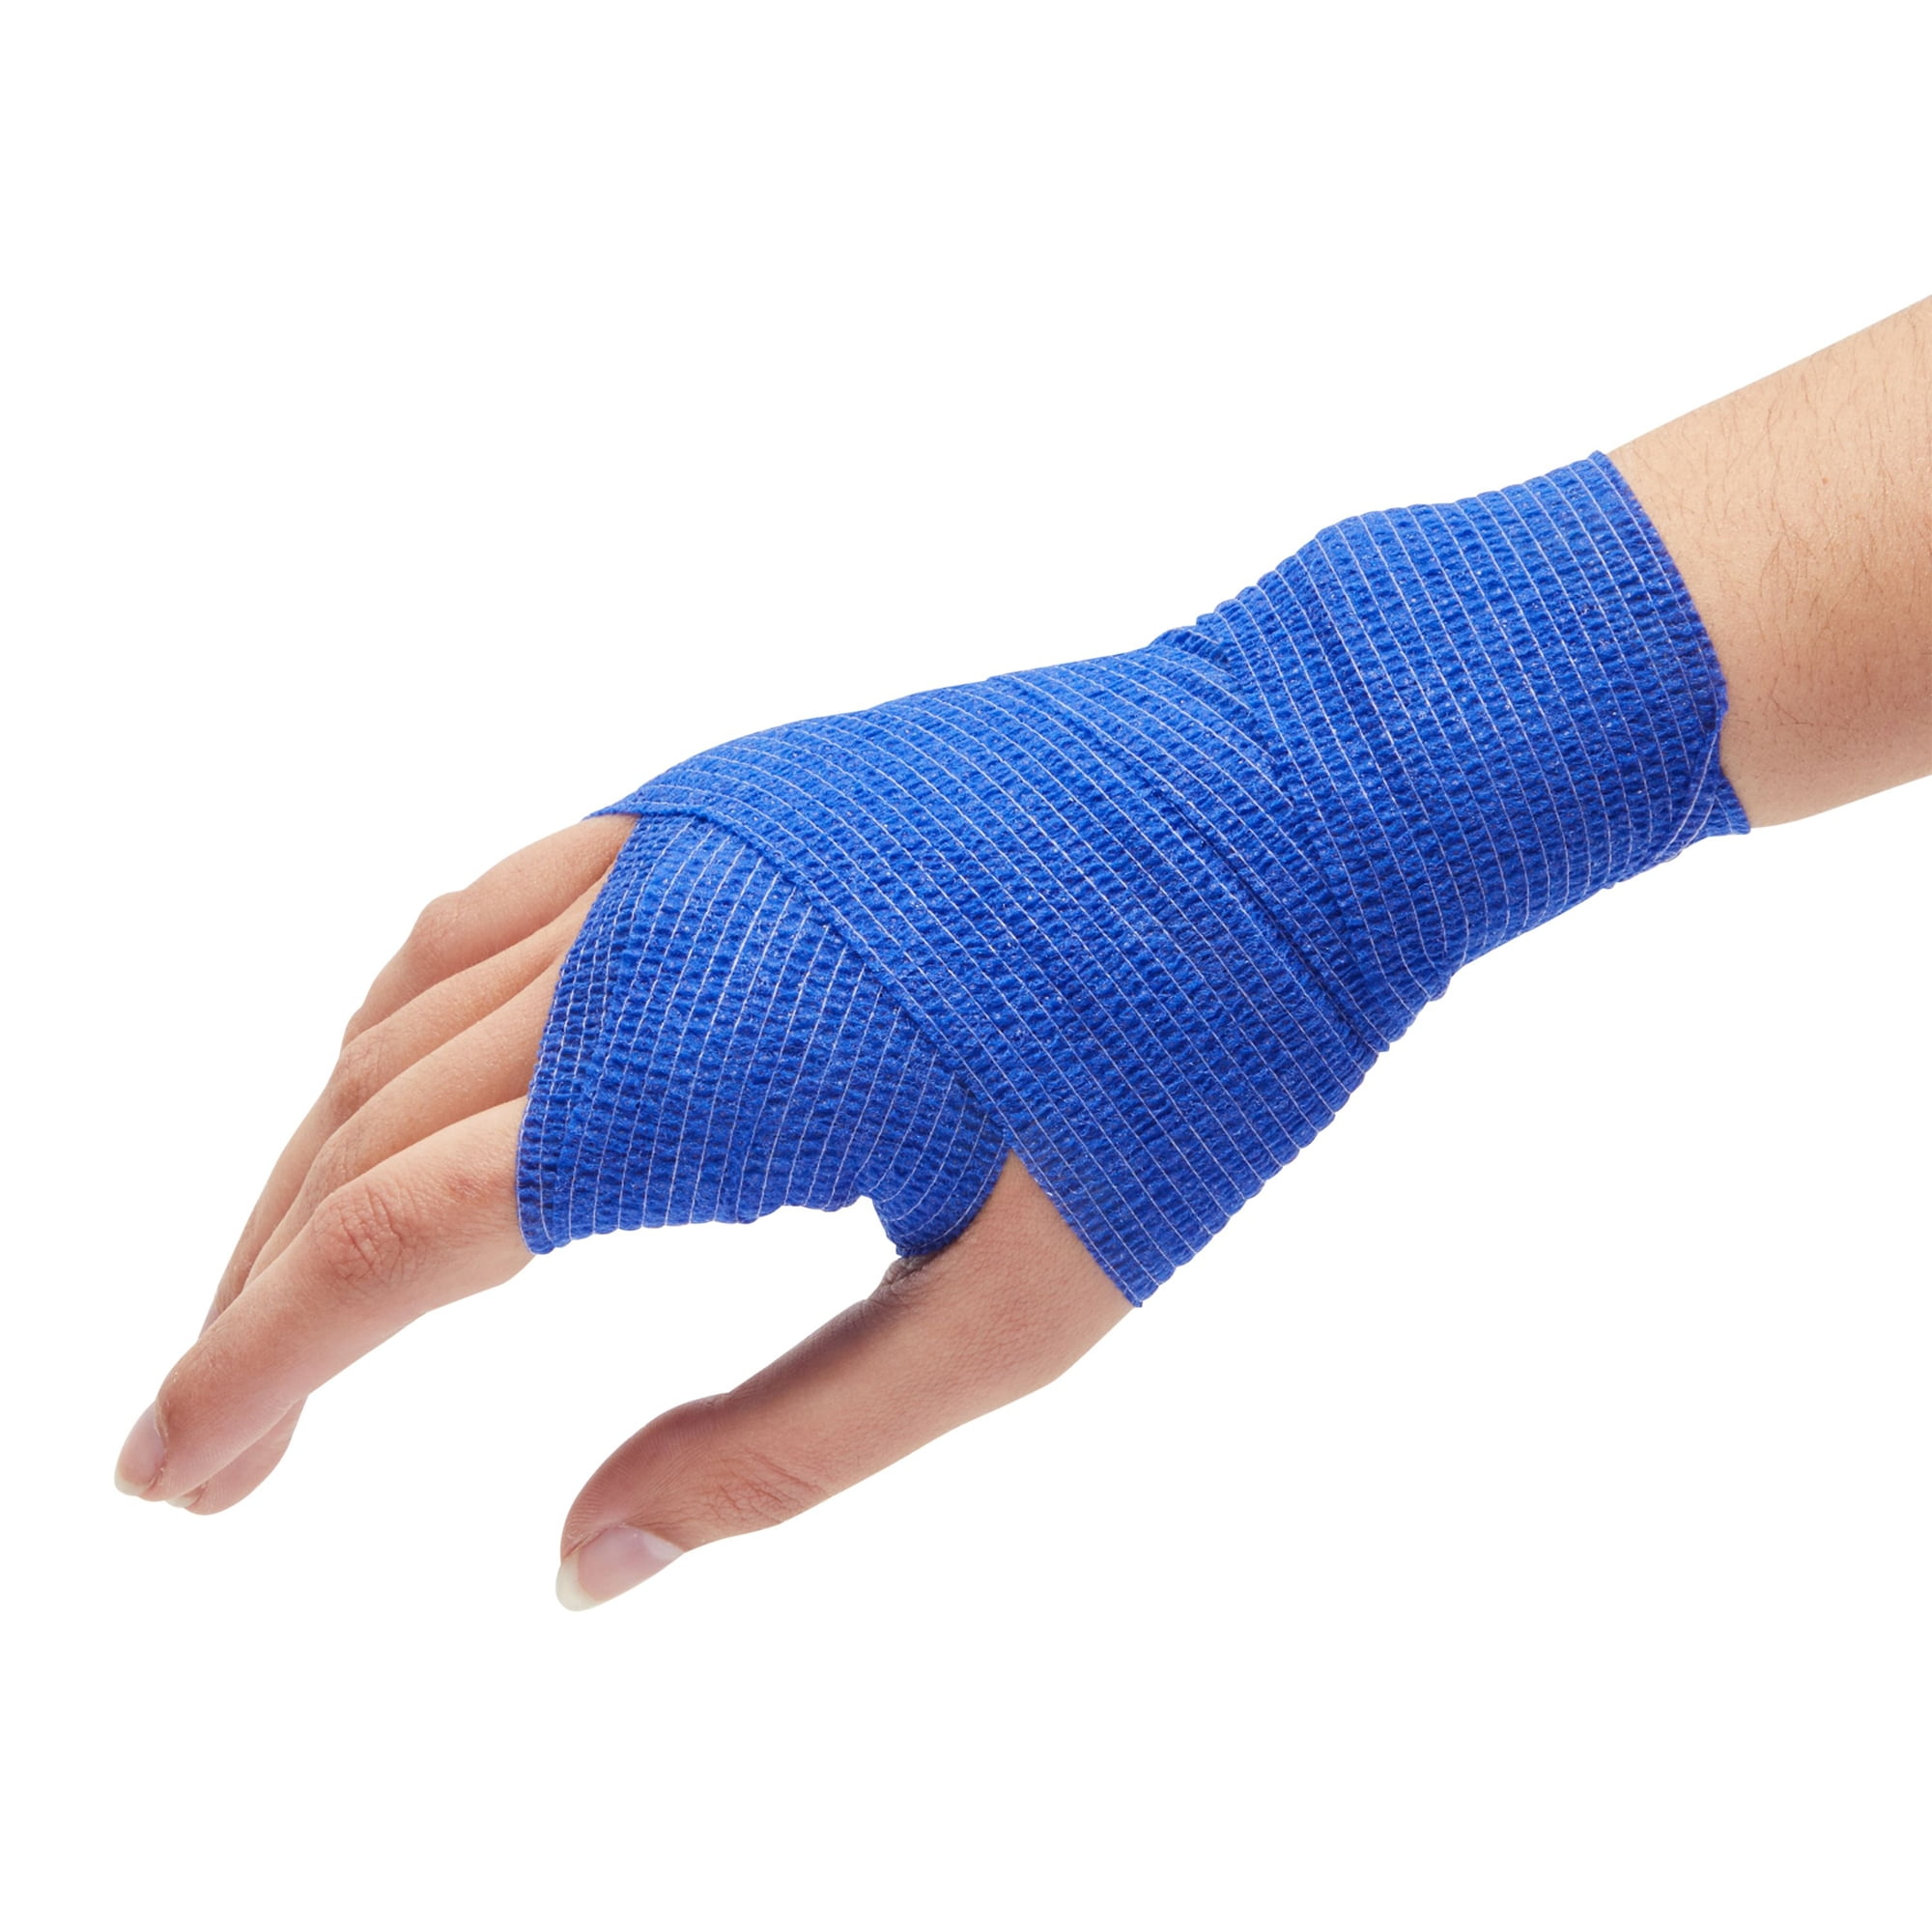 Walgreens Reversible Sport Wrap Self-Adhering Bandage, Red and Blue